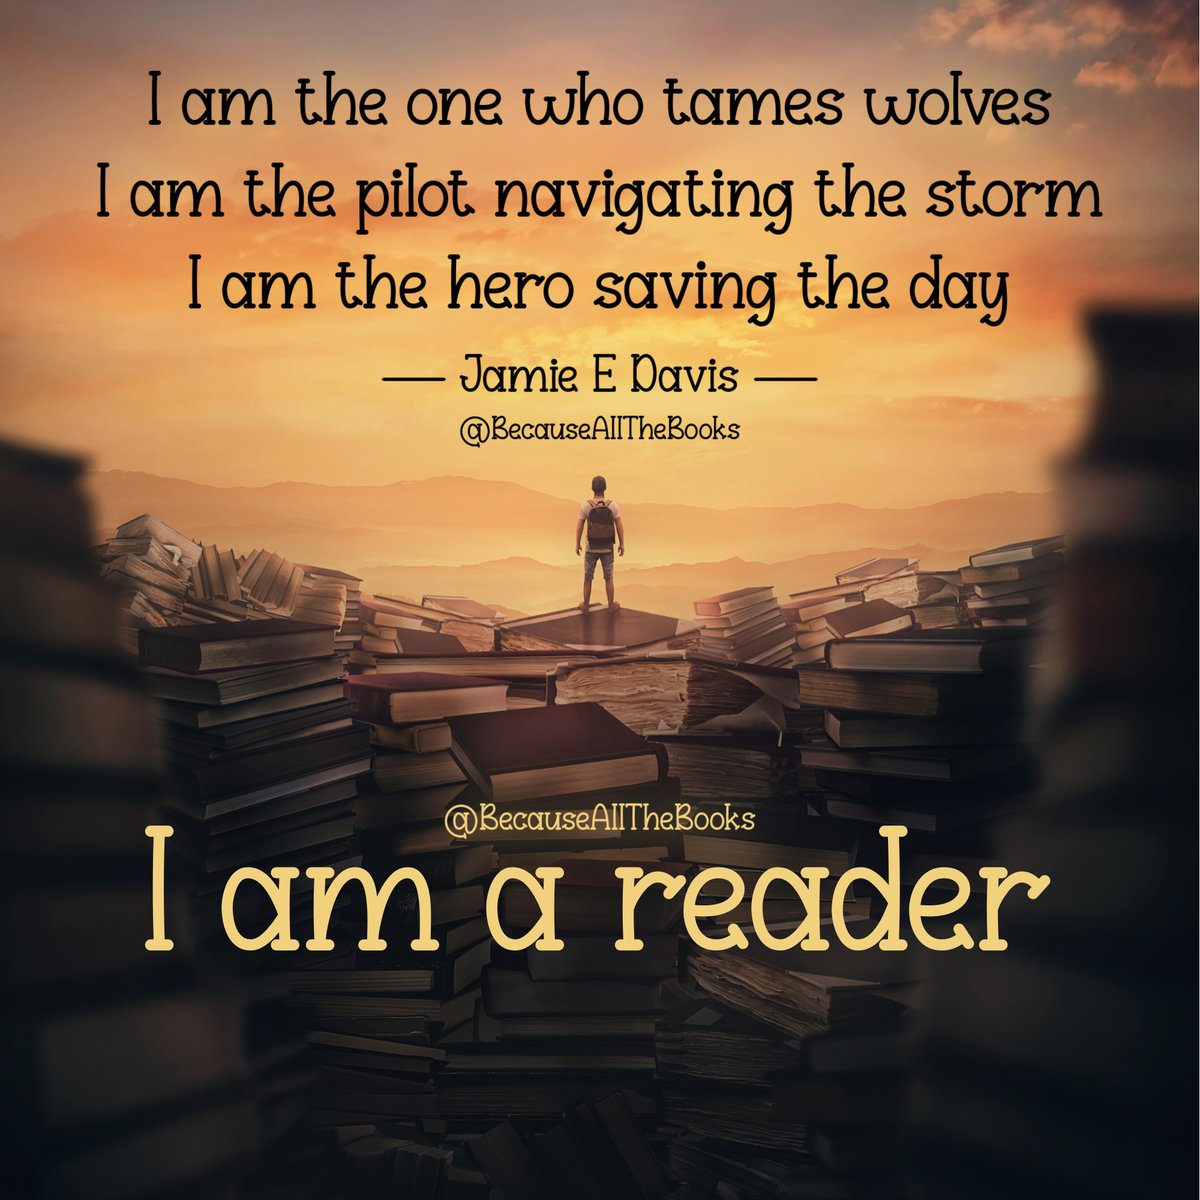 Oh yes, I am a reader! 

#BecauseAllTheBooks #IAmAReader #ReadingLife #ReadingIsMagic